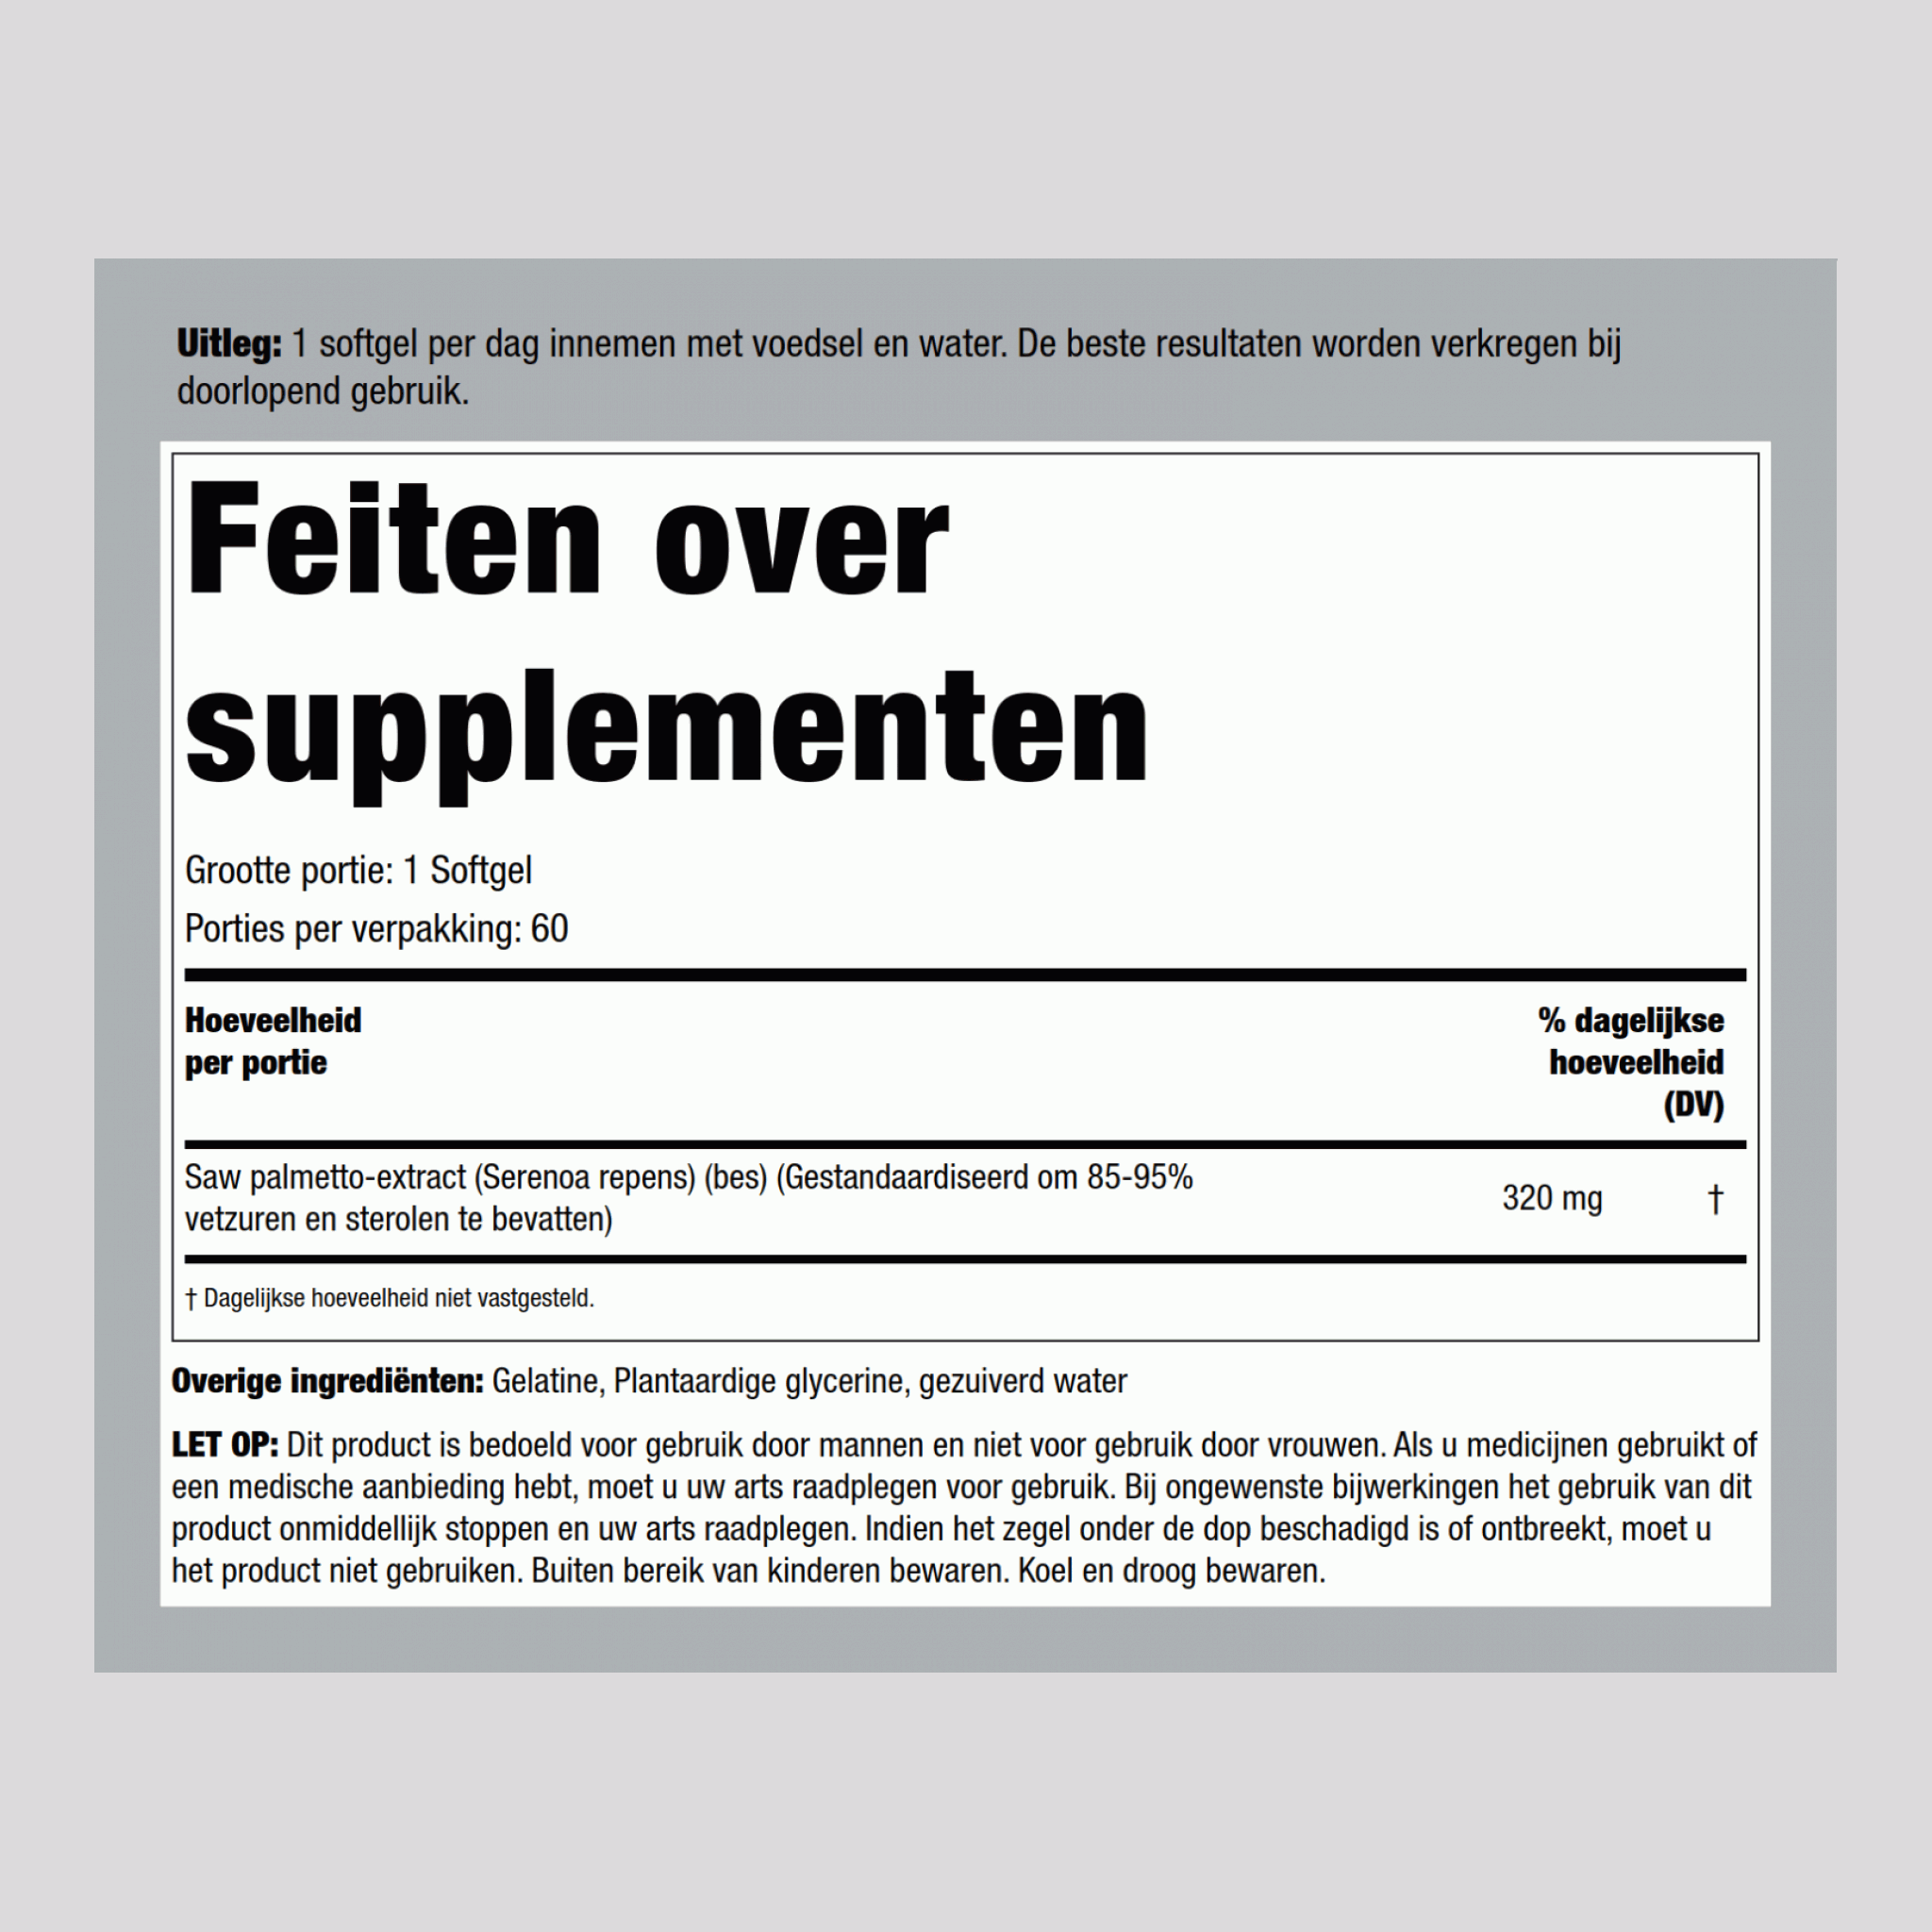 Saw palmetto gestandaardiseerd extract 320 mg 60 Softgels     